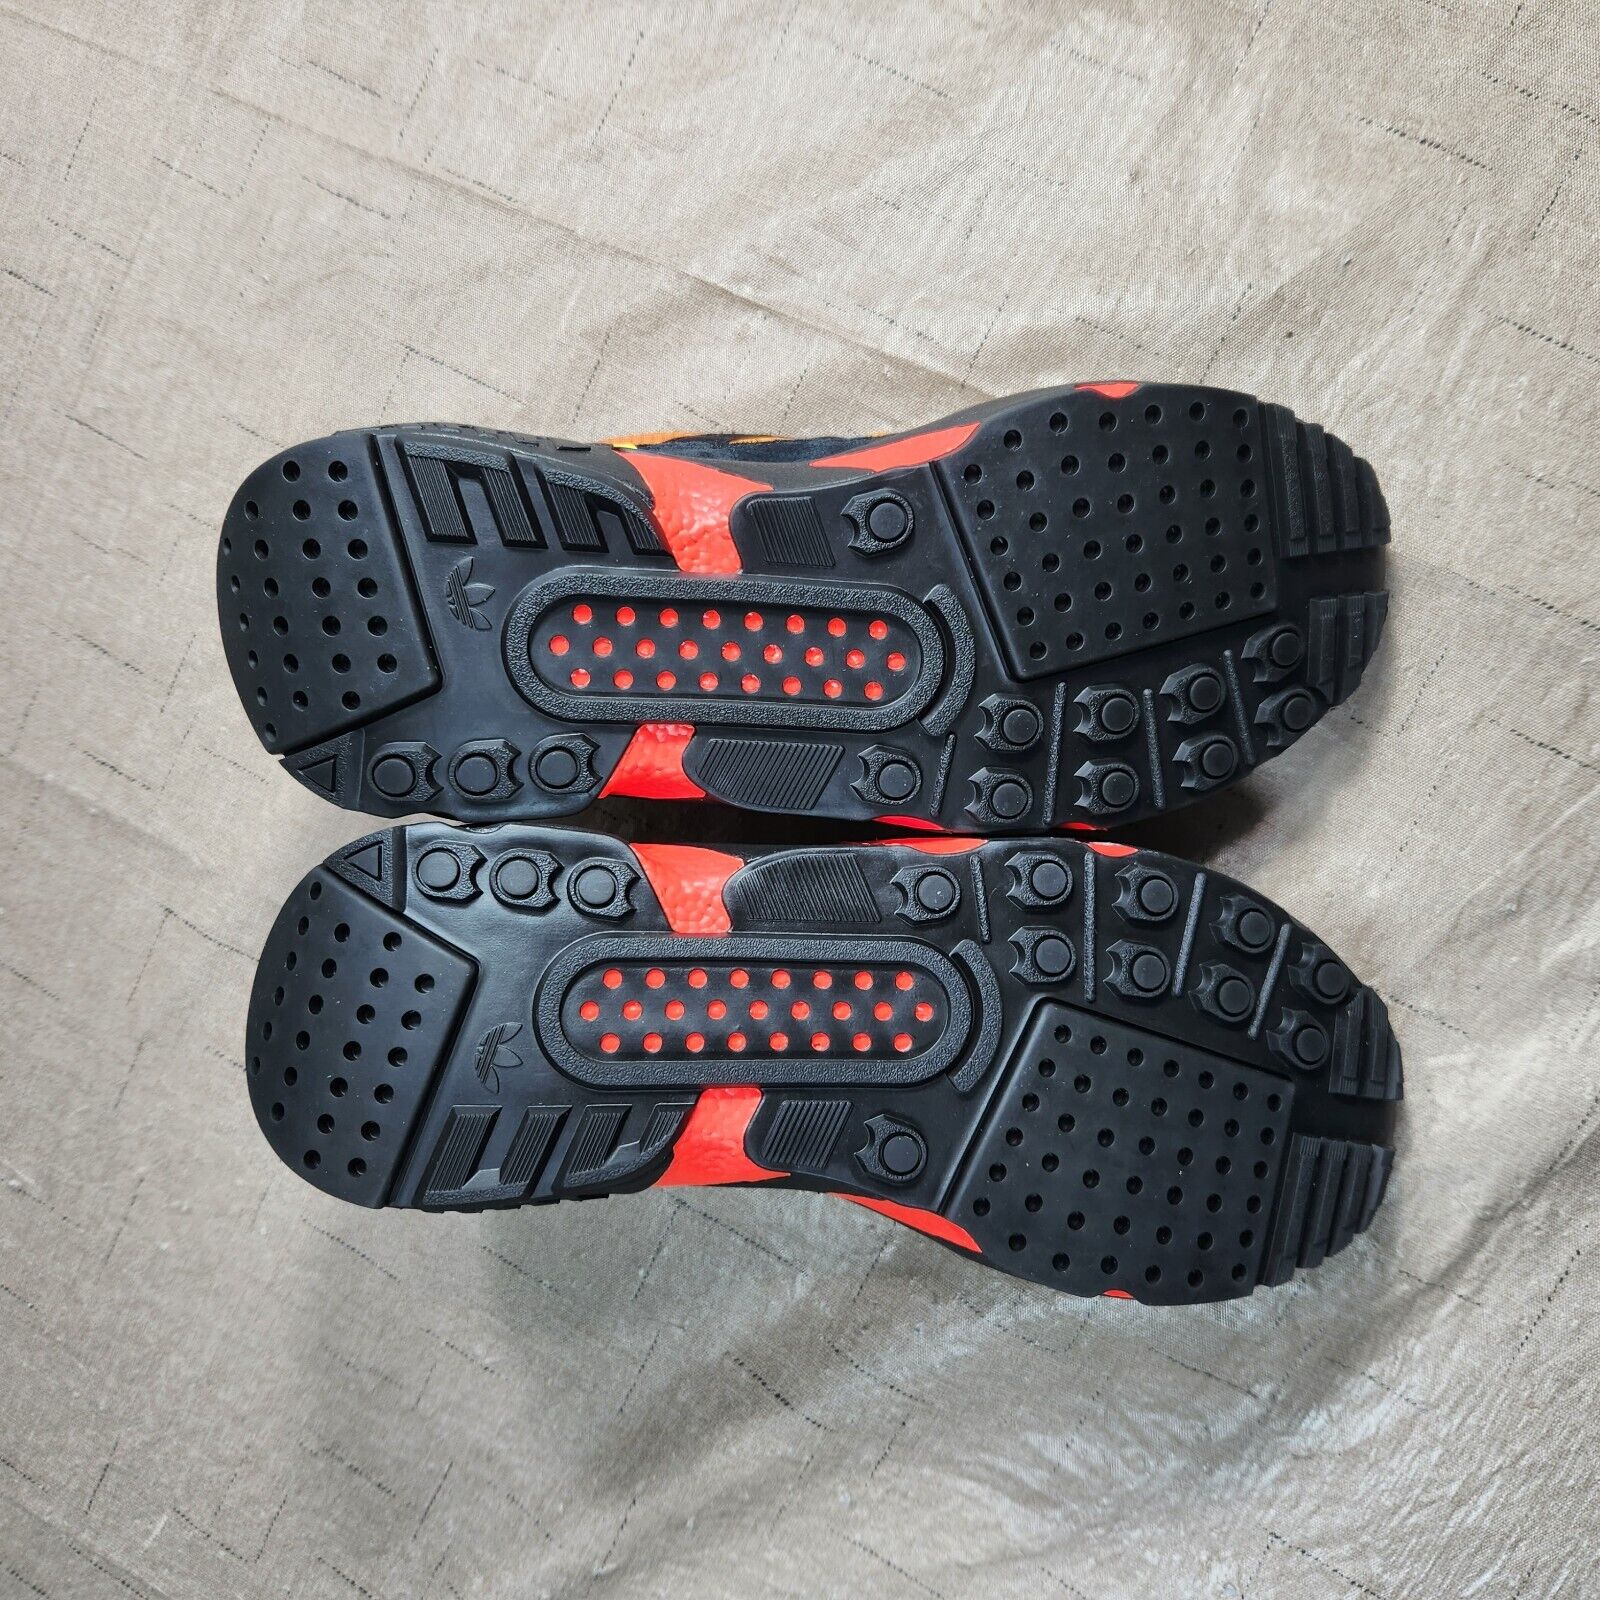 Adidas ZX Boost 22 Men Casual Lifestyle Shoe Black Orange Sneaker Trainer  sz 11